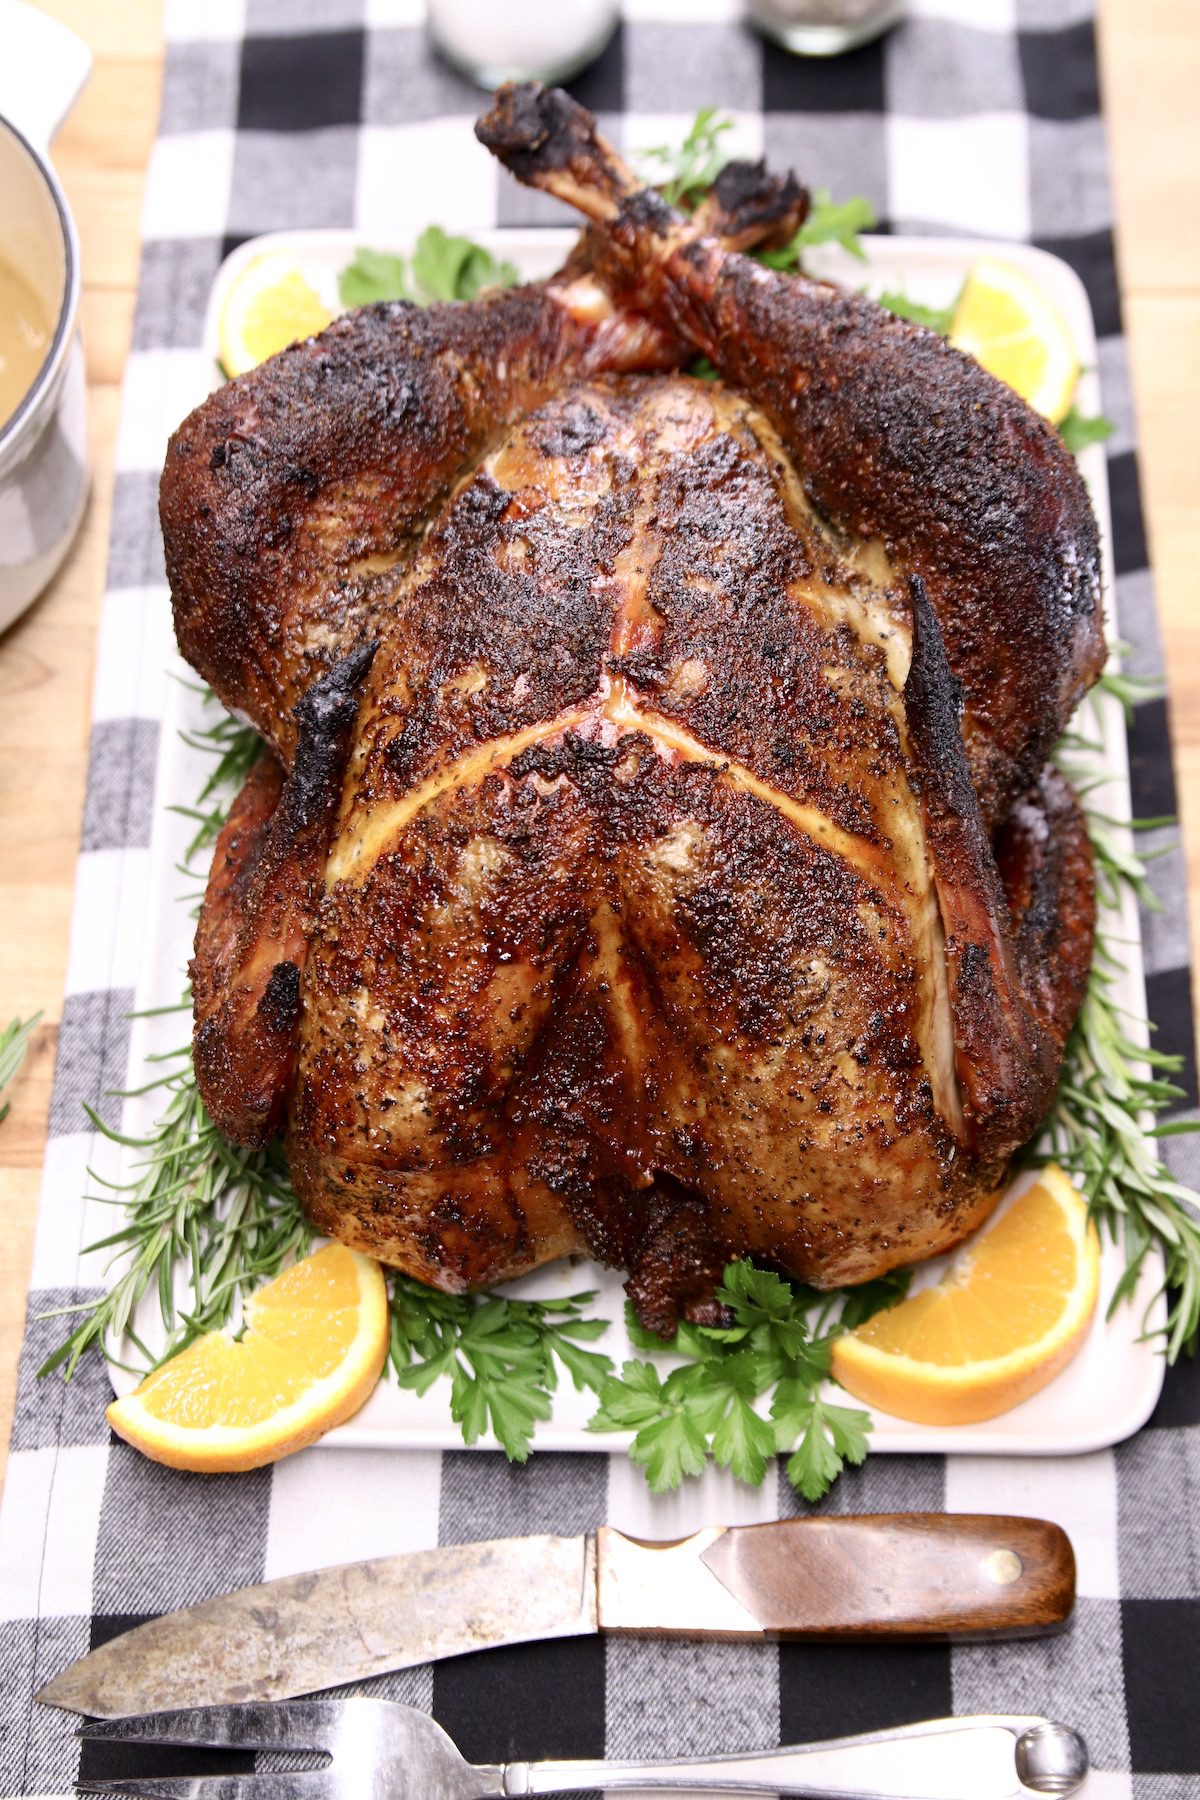 Grilled Turkey on a platter